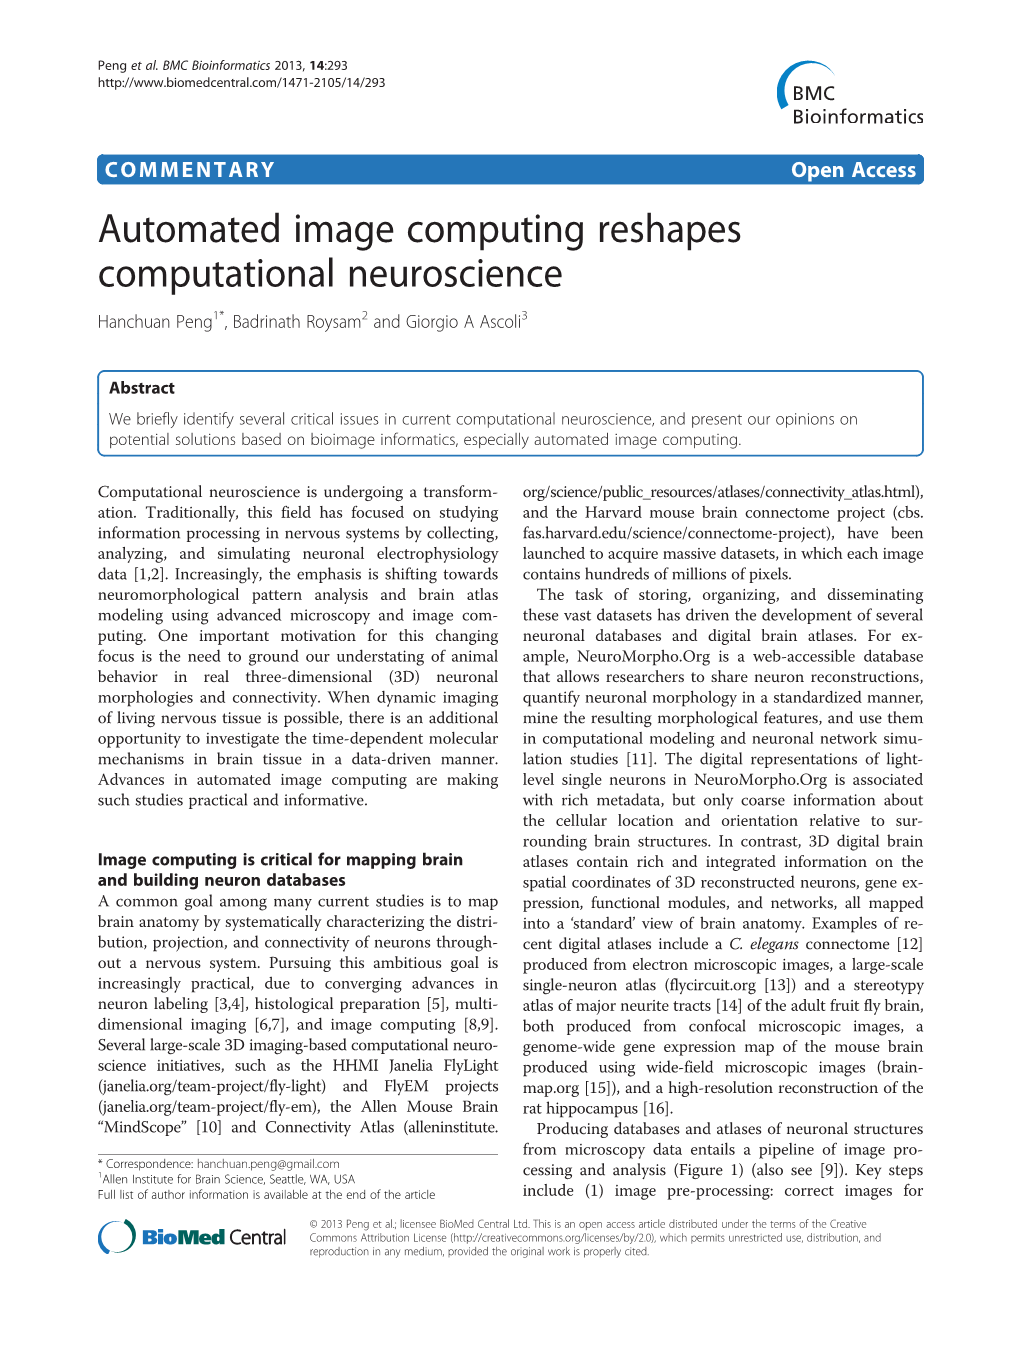 Automated Image Computing Reshapes Computational Neuroscience Hanchuan Peng1*, Badrinath Roysam2 and Giorgio a Ascoli3